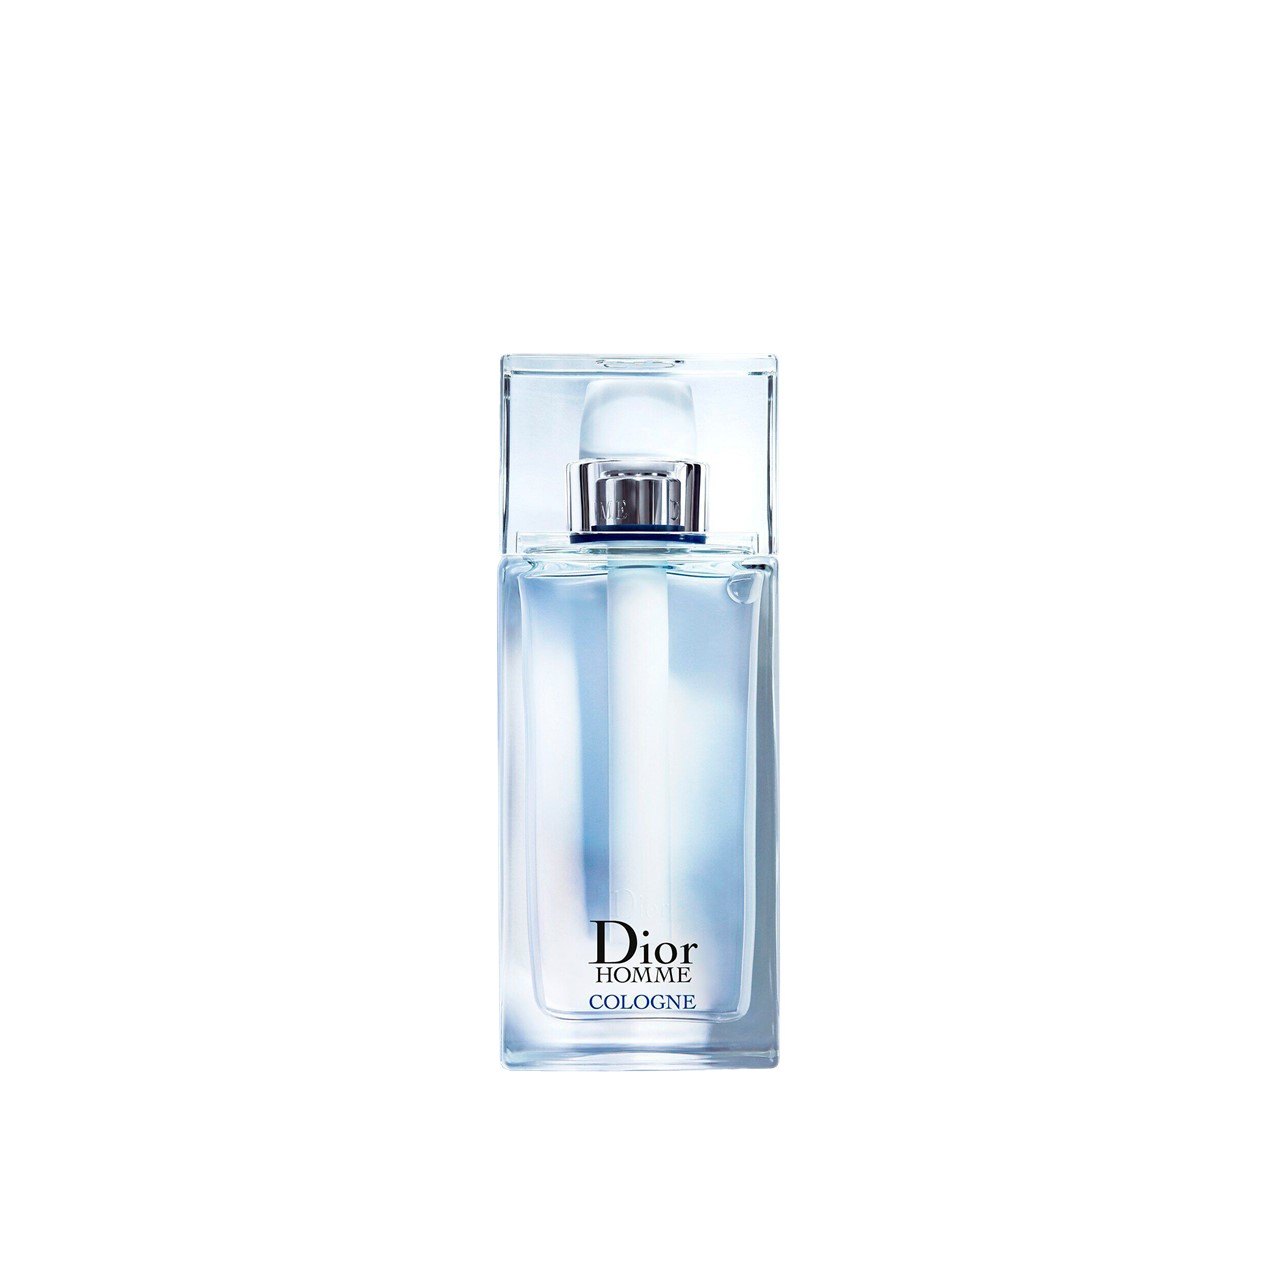 Buy Dior Homme Cologne 75ml (2.54fl oz) · USA